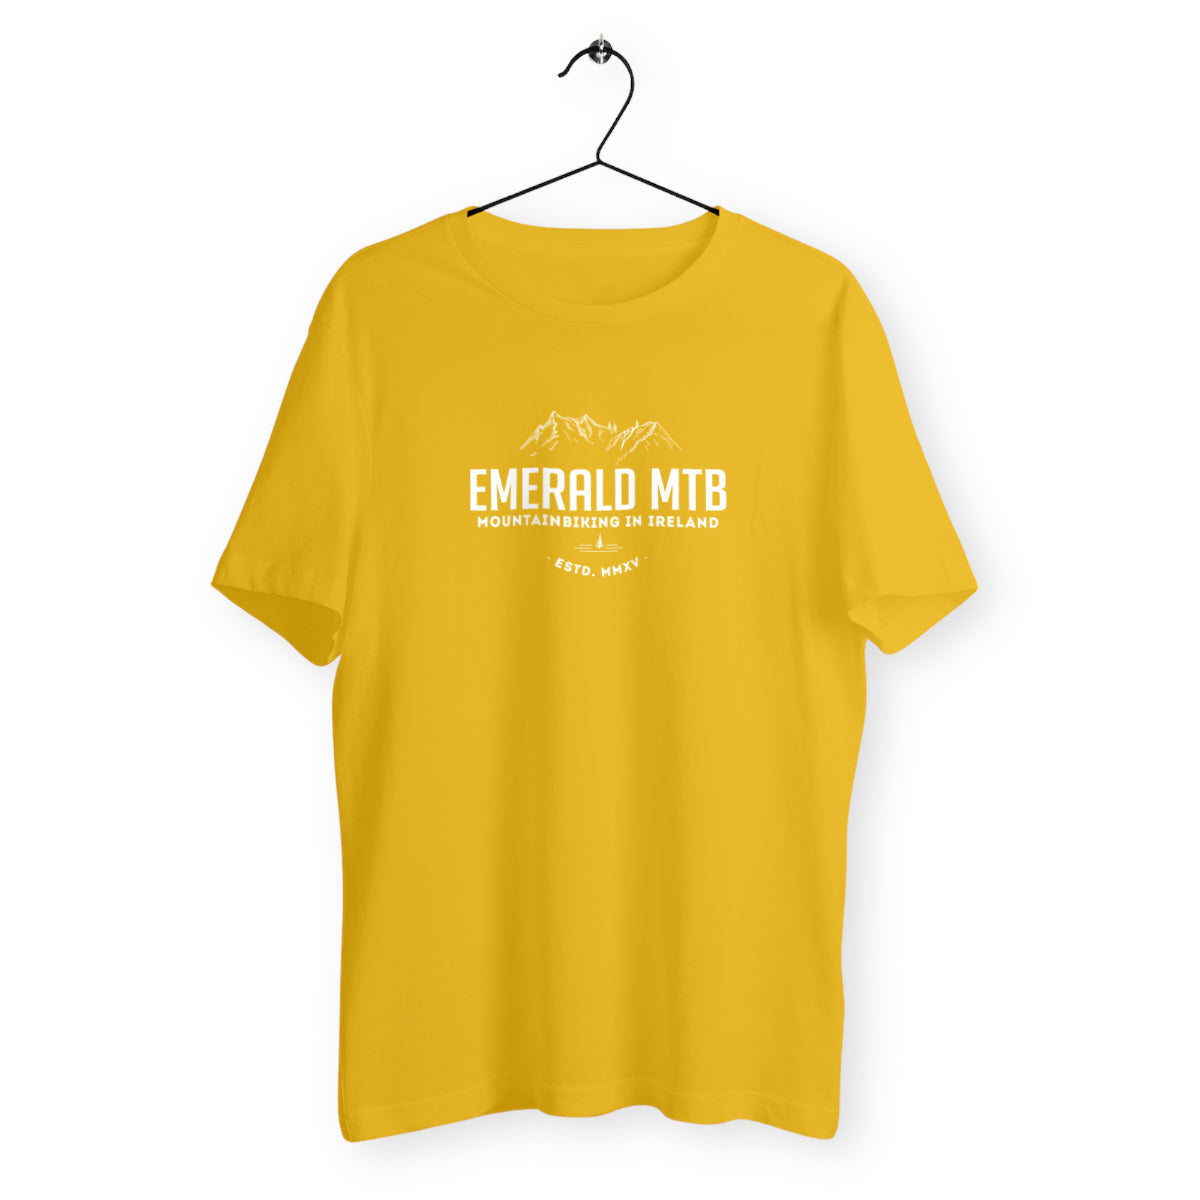 Emerald MTB t-shirt